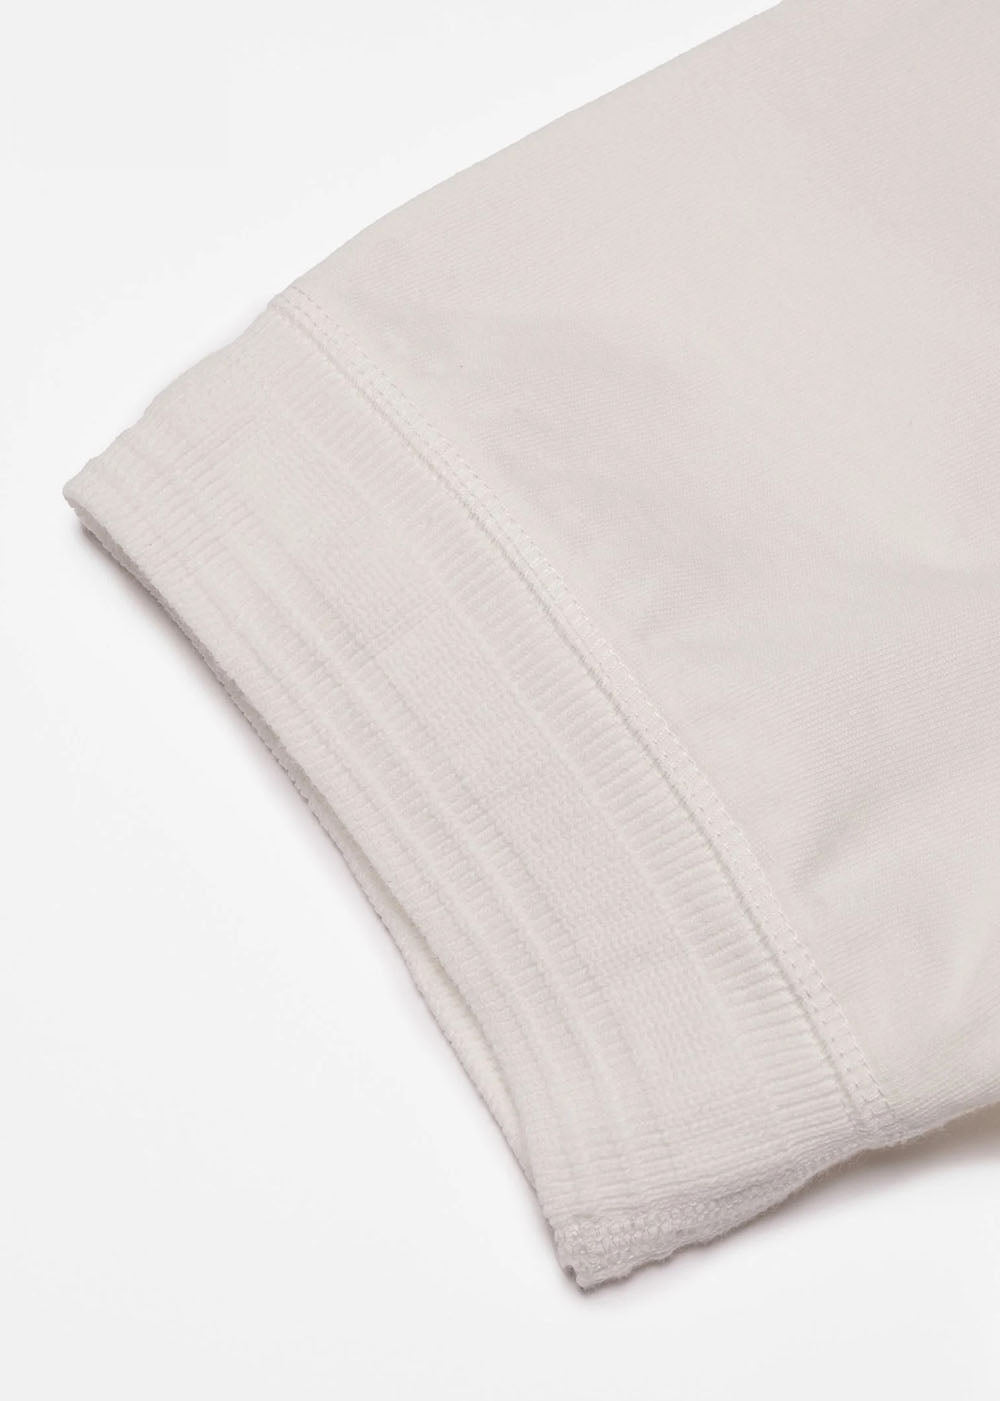 Short Sleeve Henley T-Shirt - Ecru - Nudie Jeans Canada - Danali